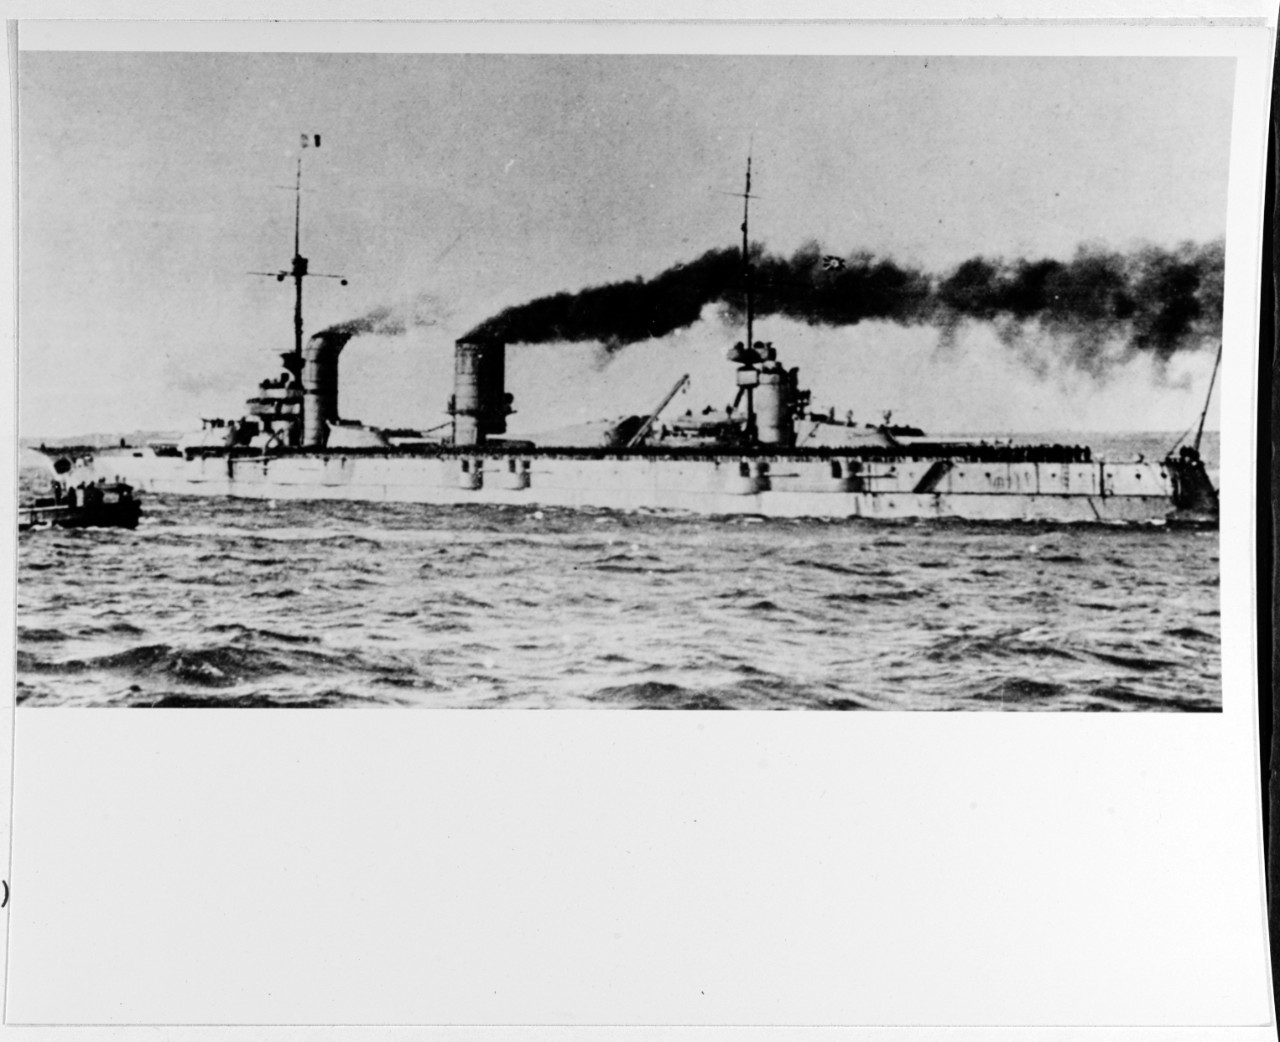 PARIZHKAYA KOMMUNA (Soviet Battleship, 1911-56)